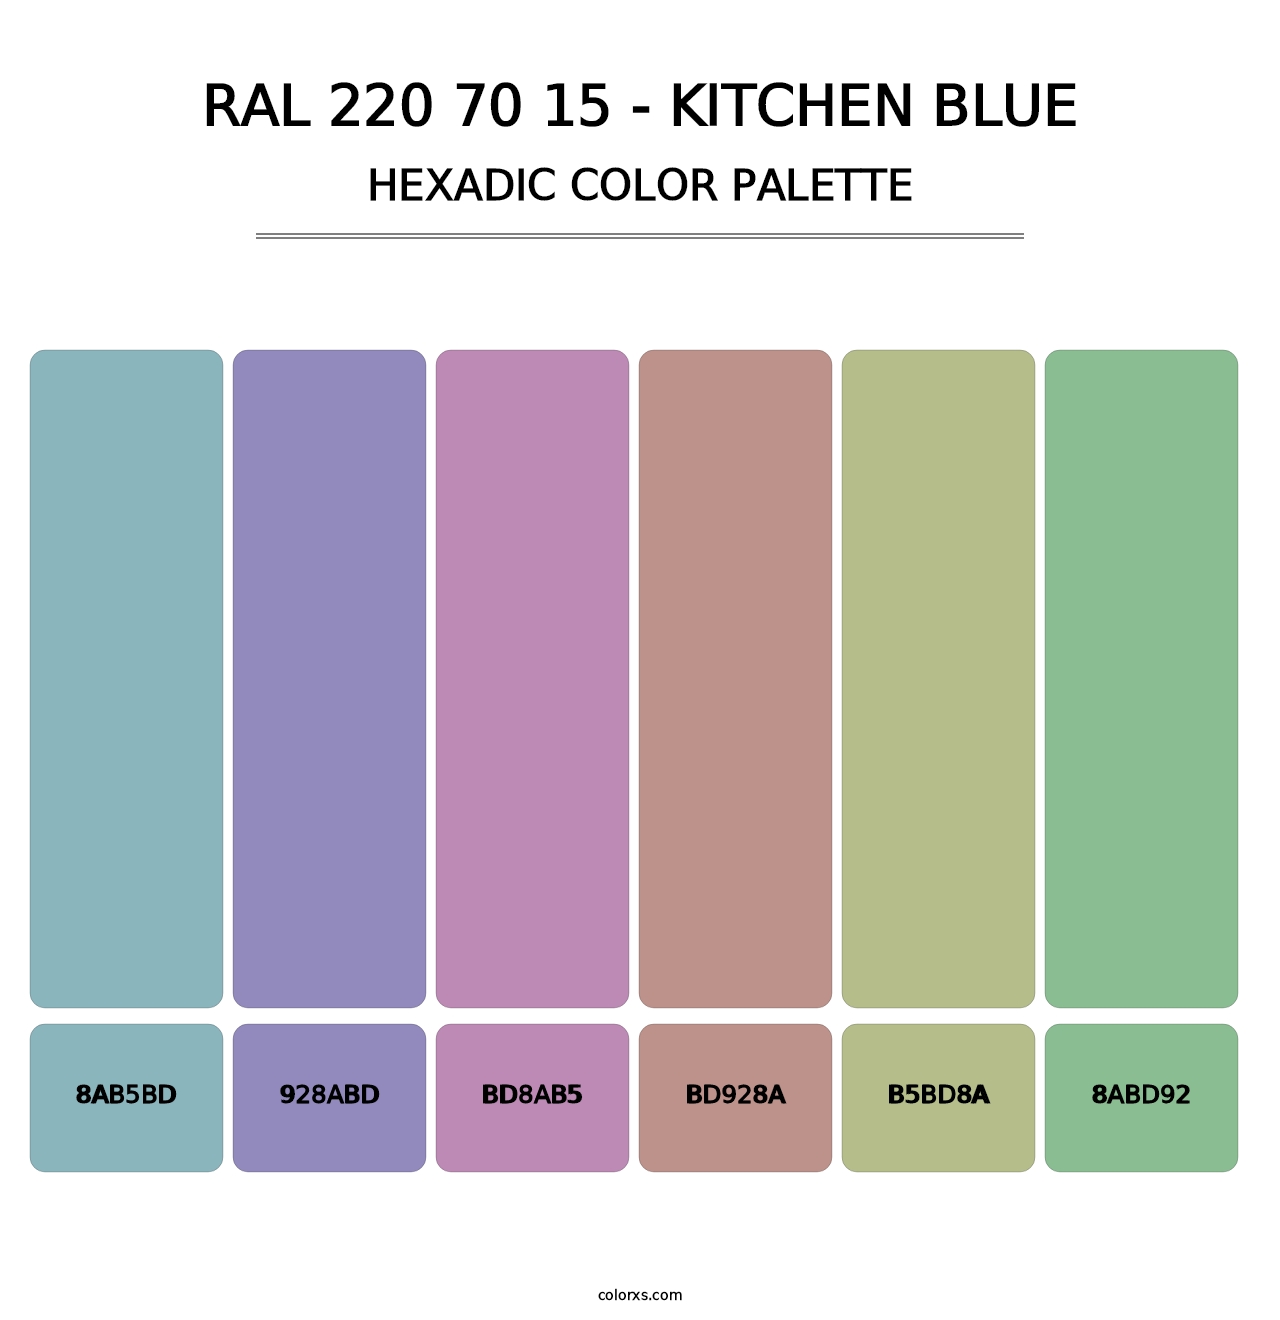 RAL 220 70 15 - Kitchen Blue - Hexadic Color Palette